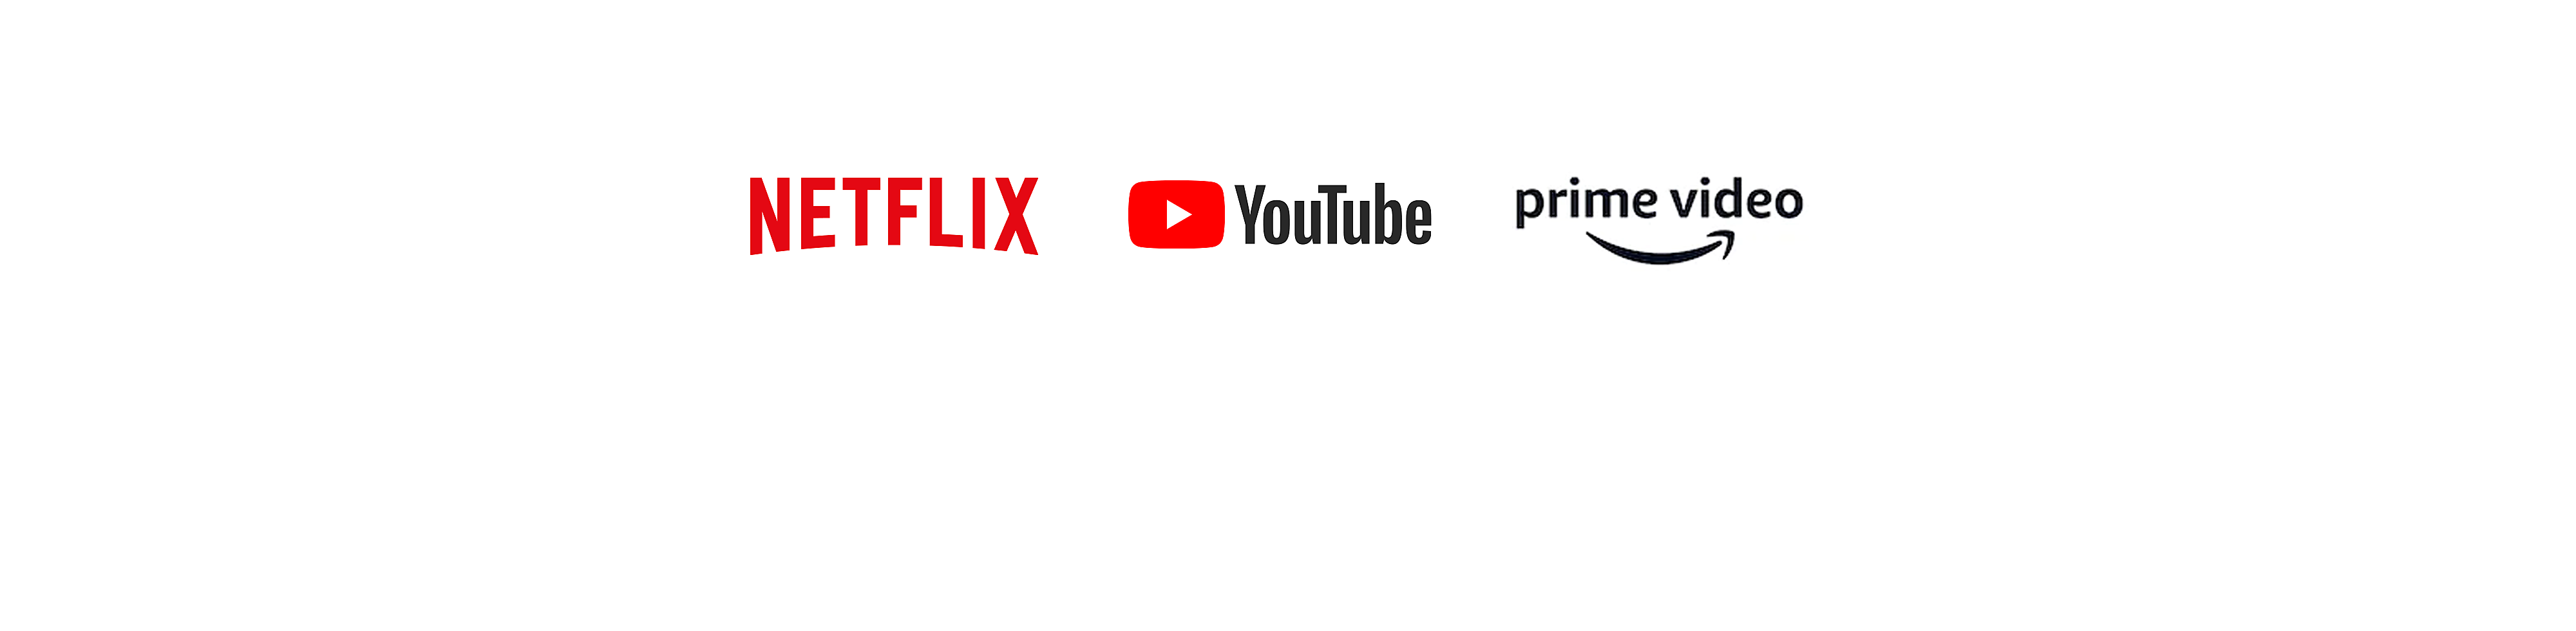 Logo de Netflix, YouTube et Amazon prime video